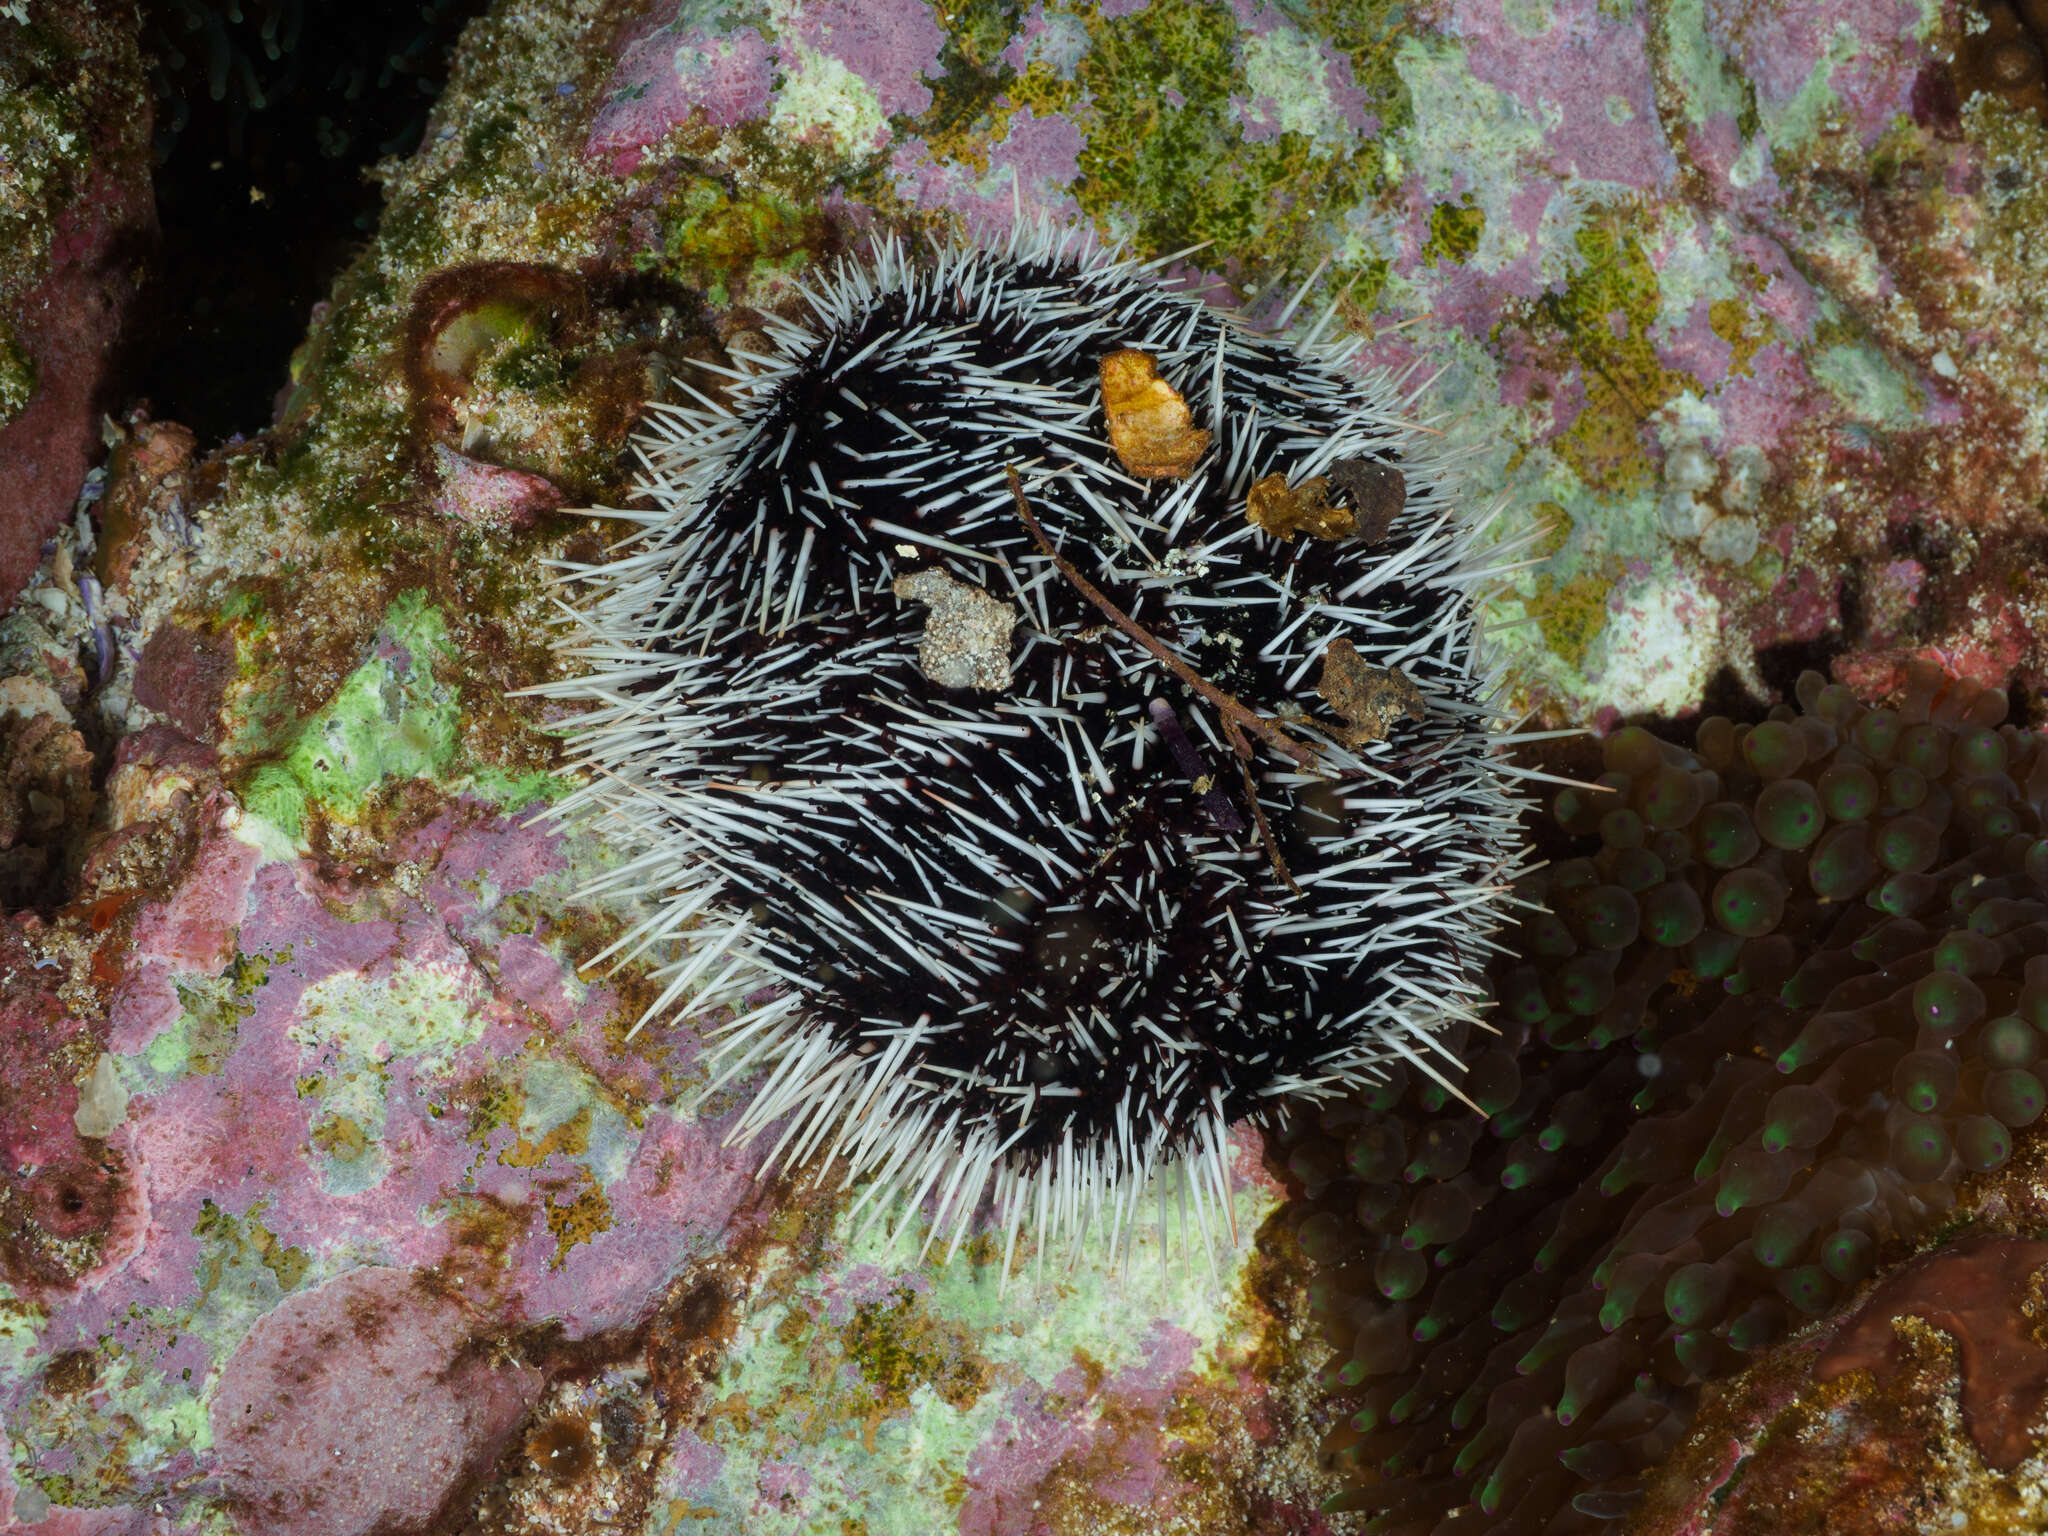 Image of Lamington urchin